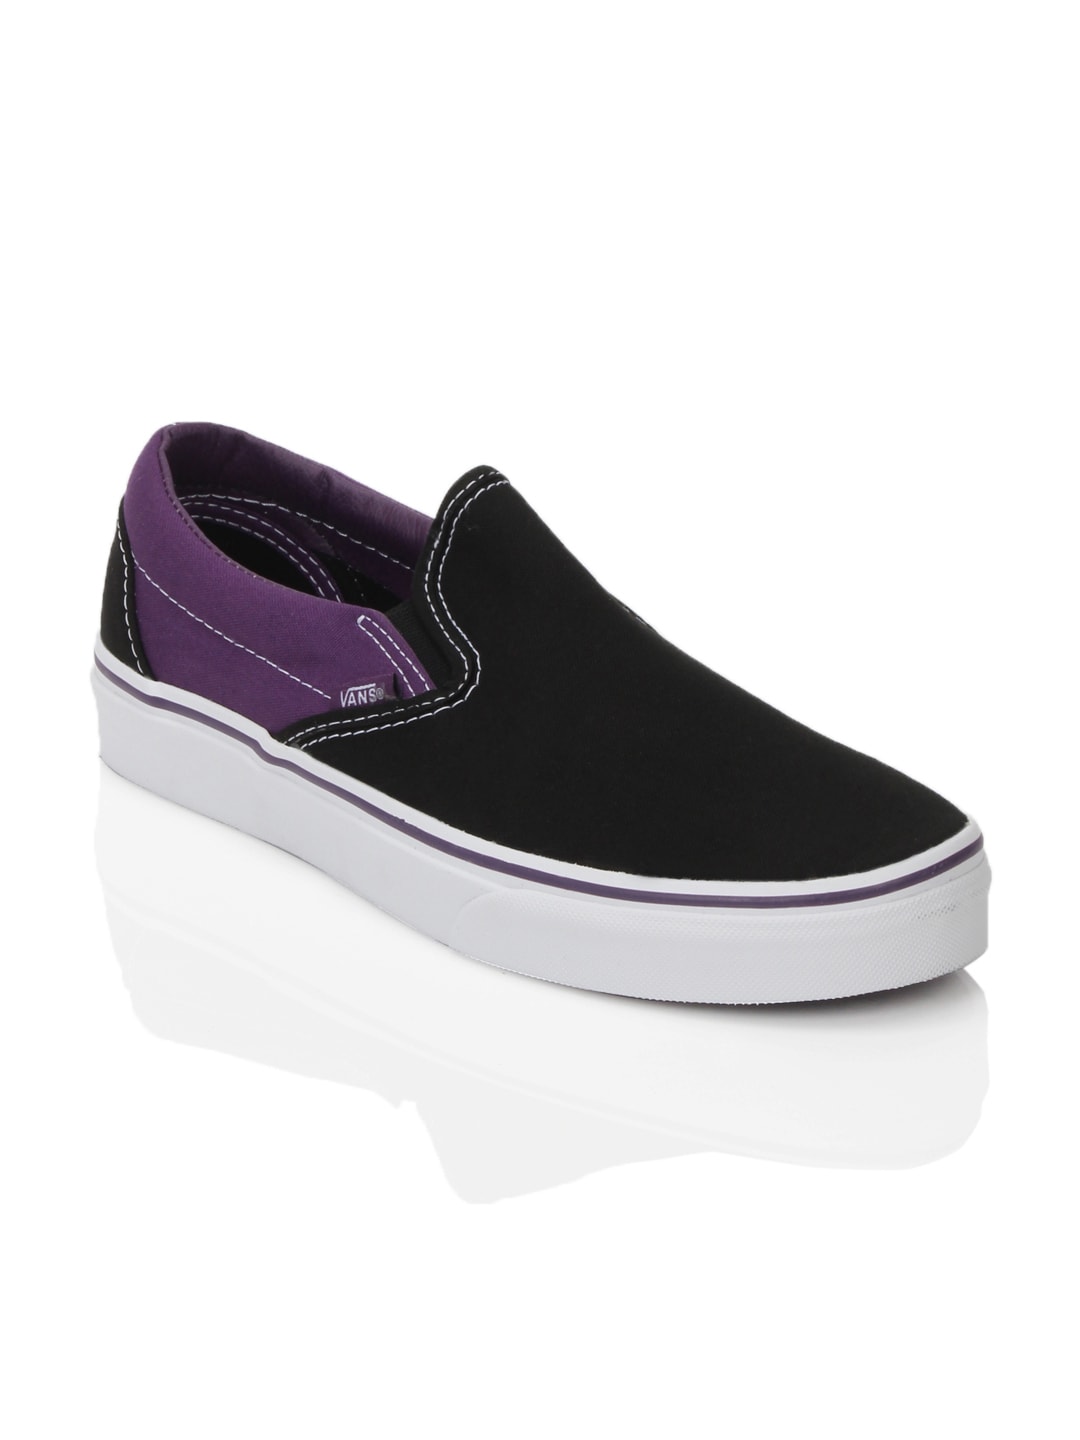 Vans Men Classic Slip-On Black Shoes